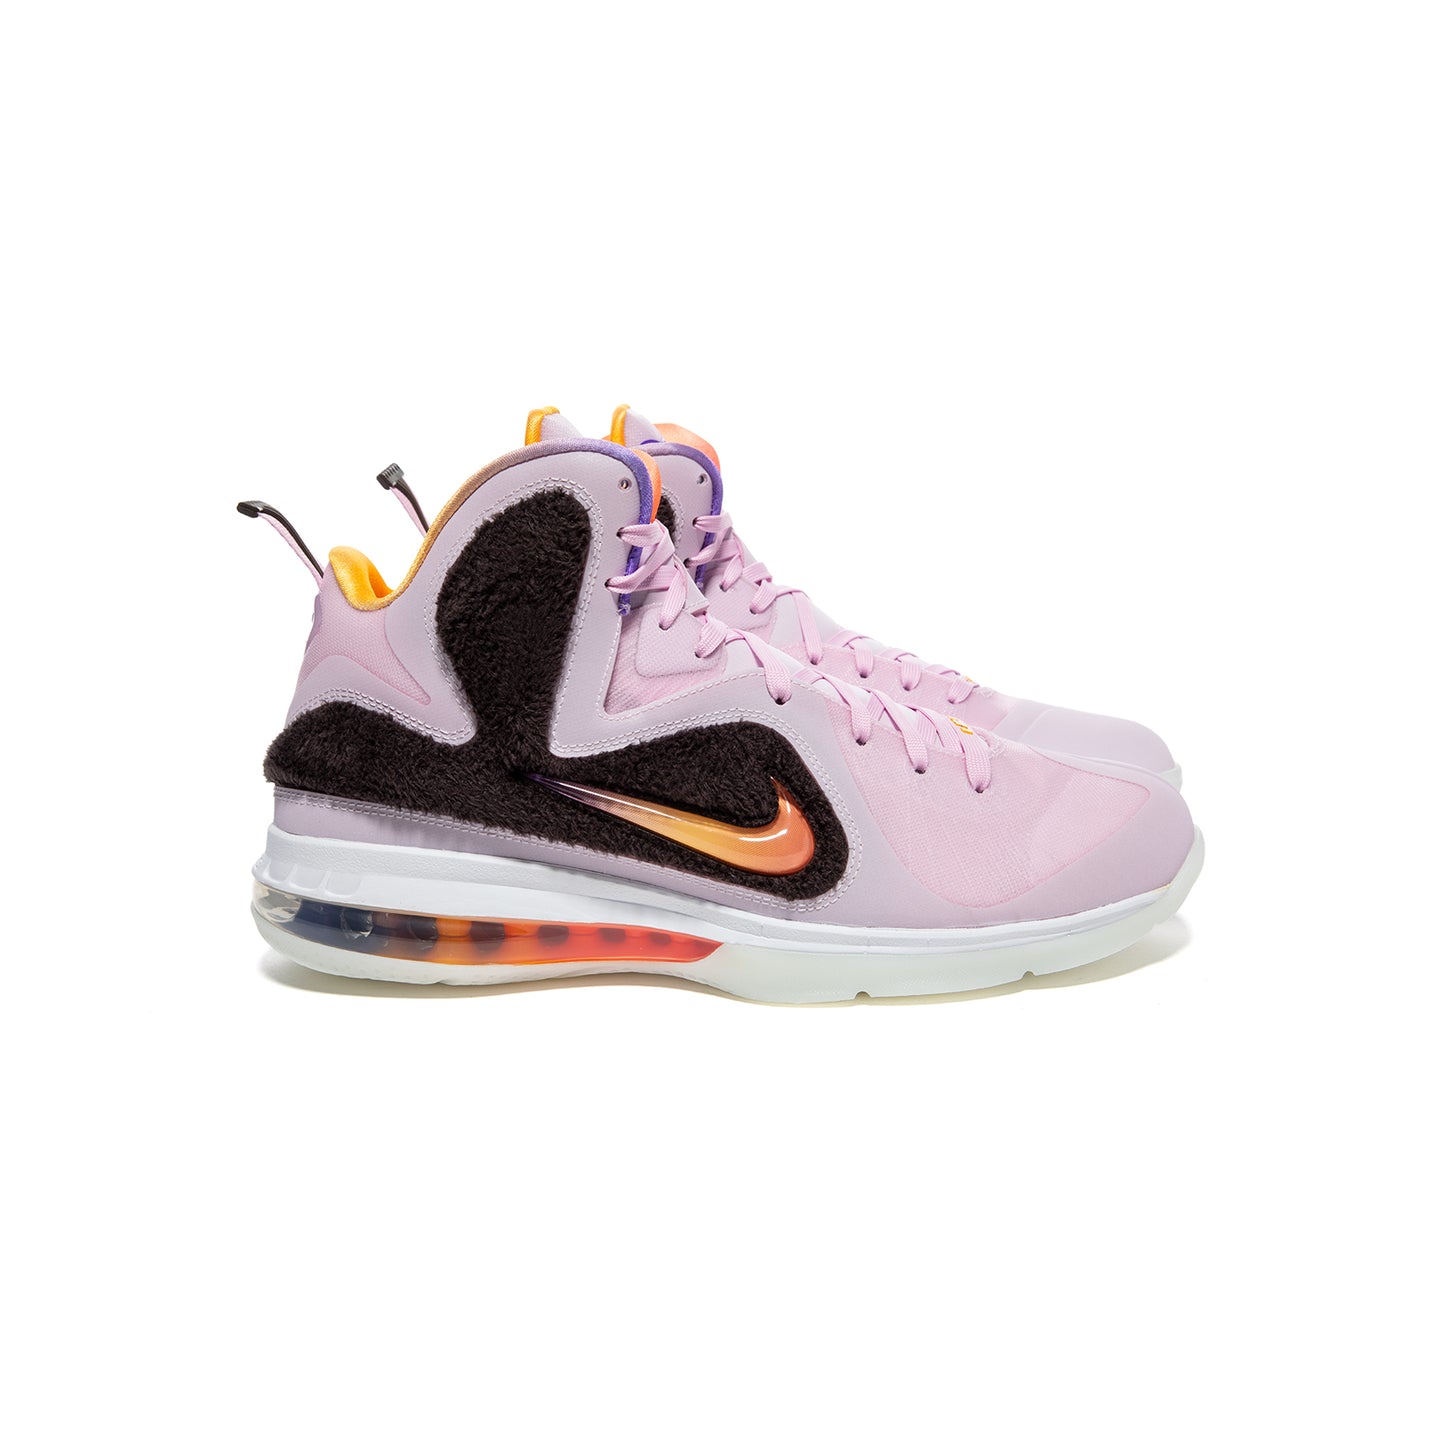 Nike LeBron IX (Regal Pink/Multi Color/Velvet Brown)